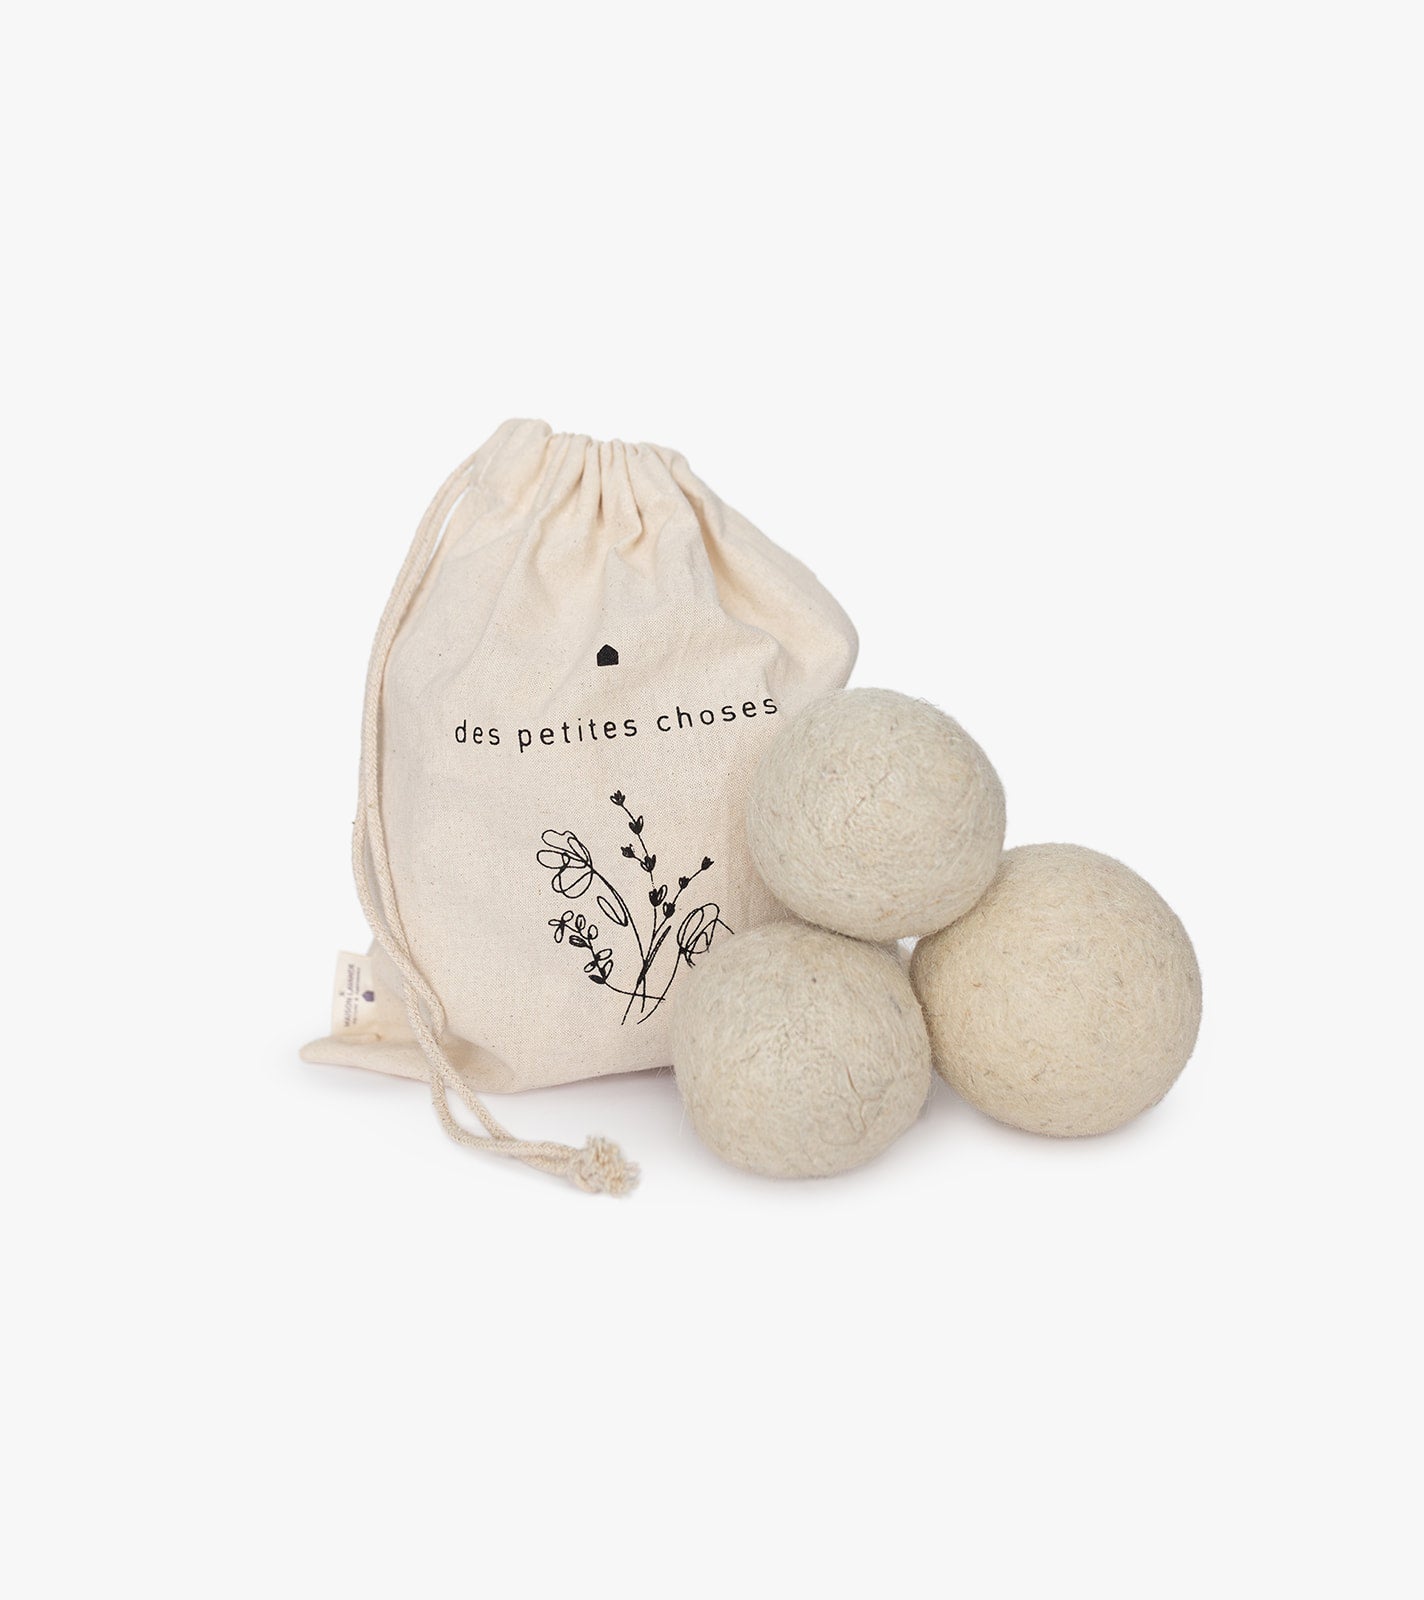 Ensemble de 3 boules de séchage||Set of 3 wool drying balls